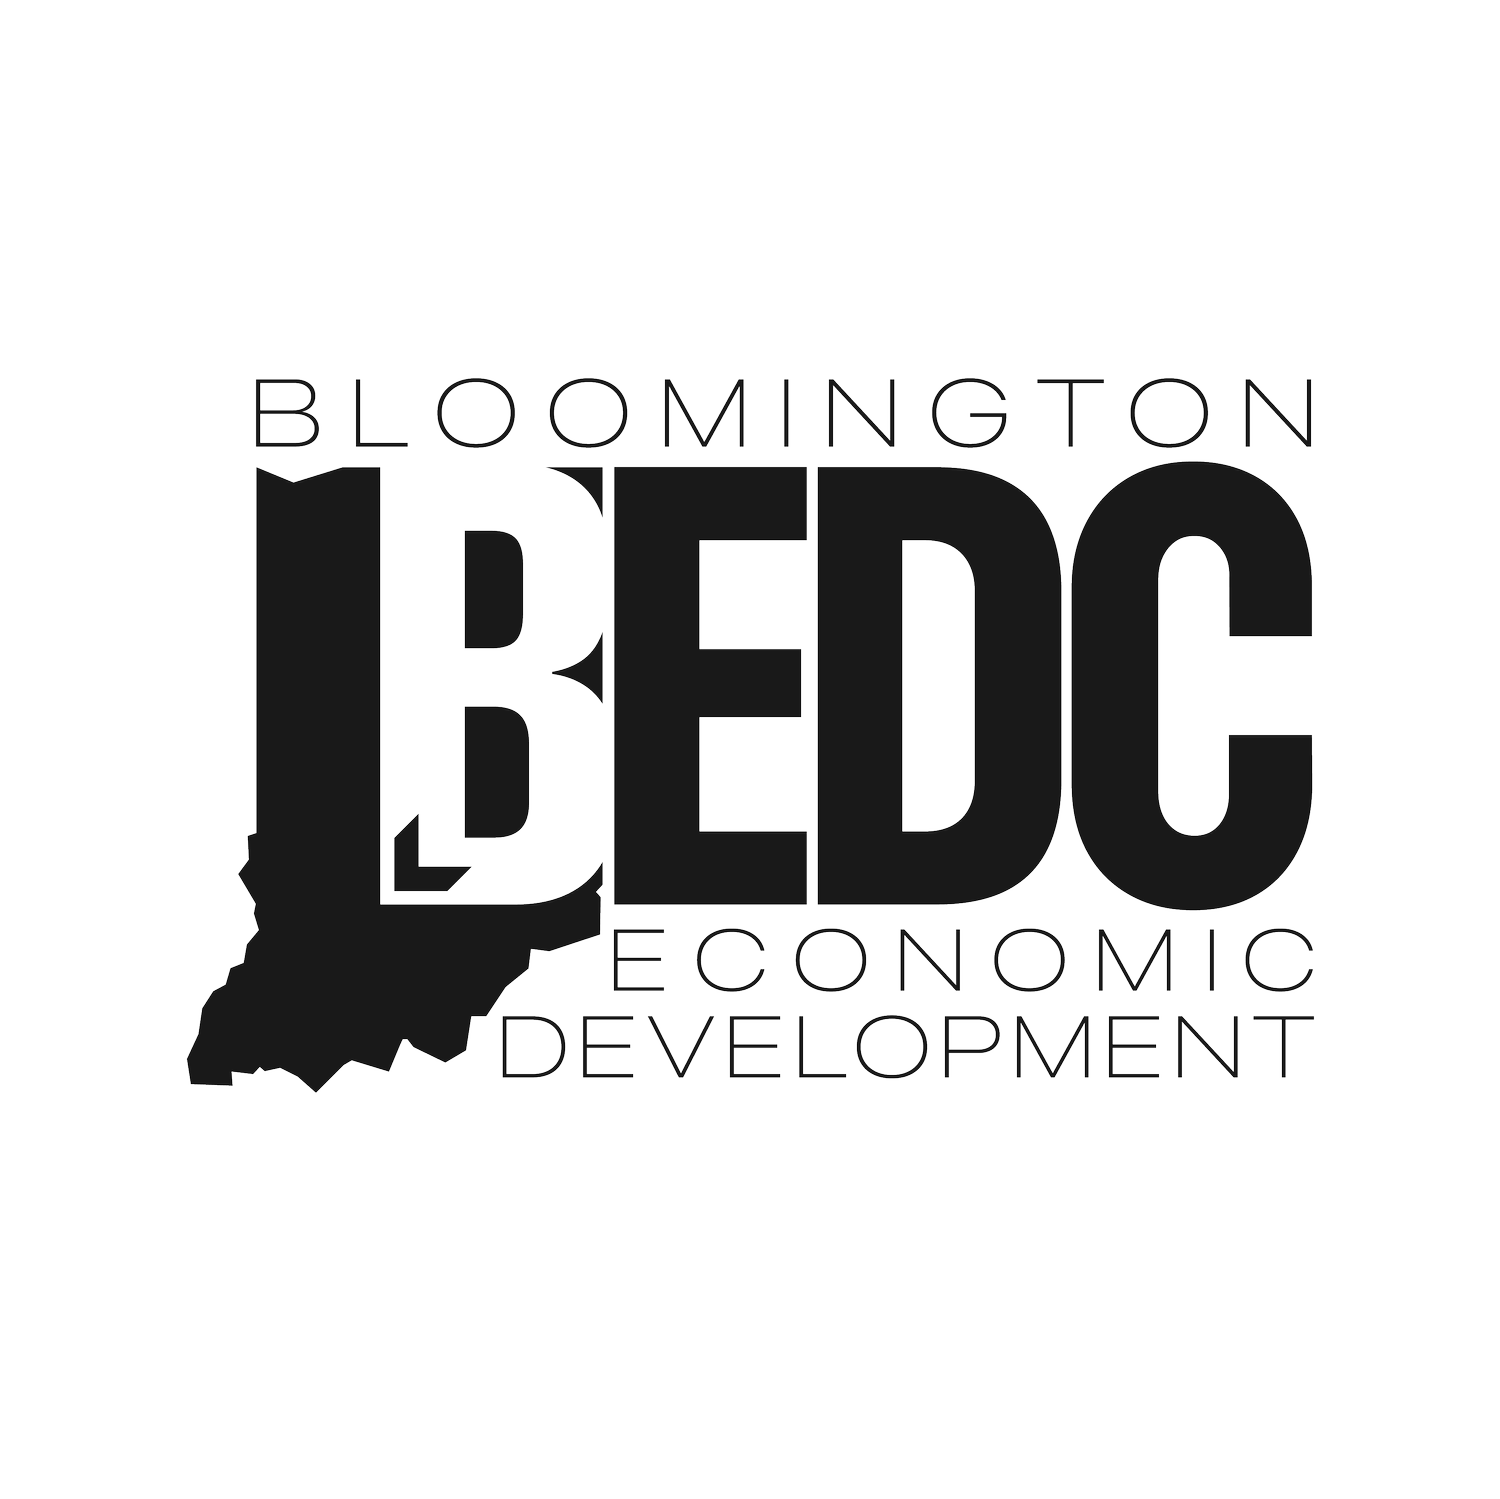 The Bloomington Economic Development Corporation